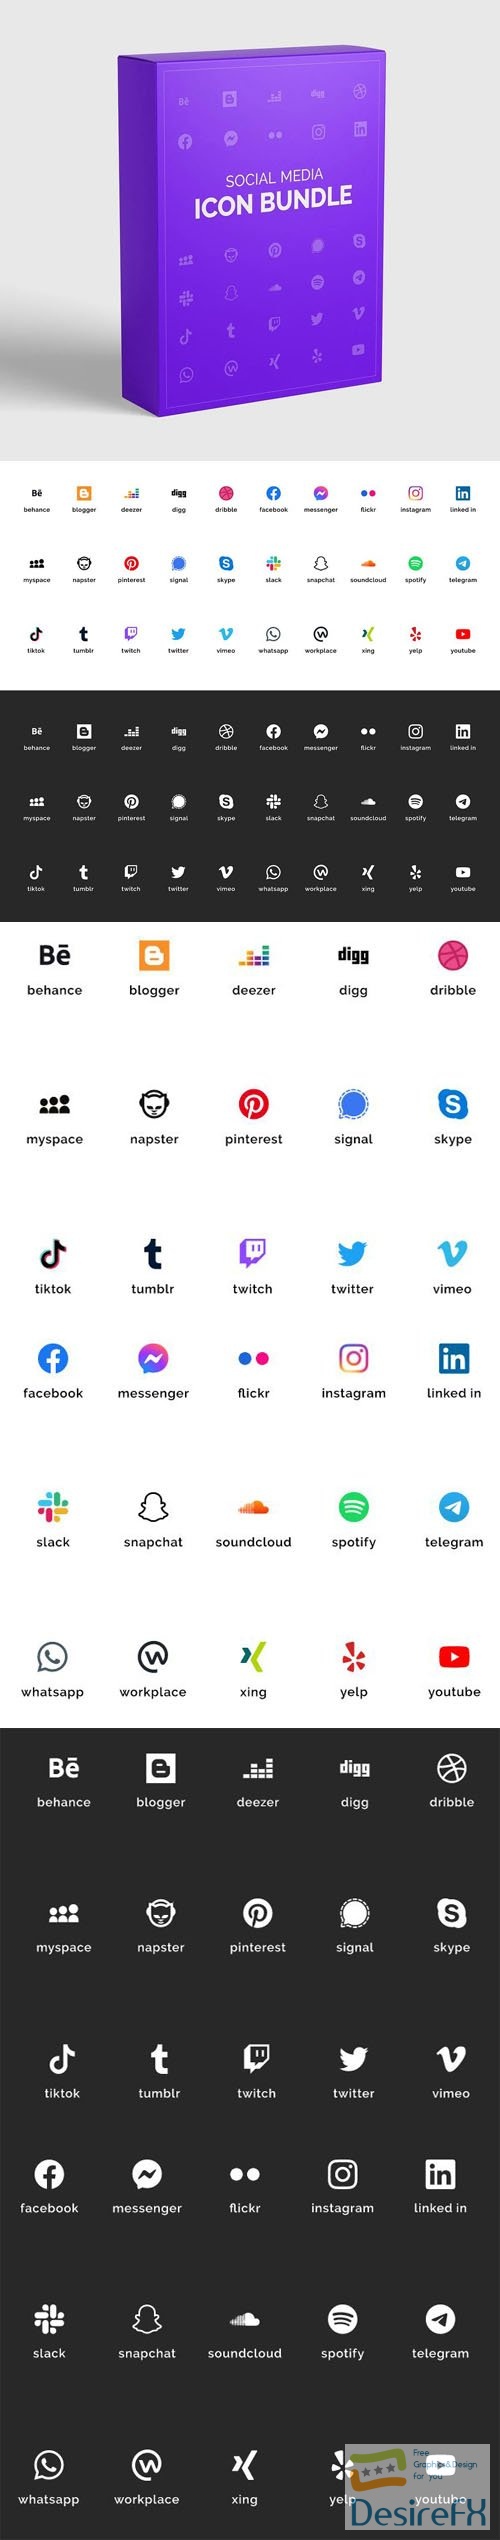 Icon Bundle - 30 Official Social Media Vector Icons Color/Black/White